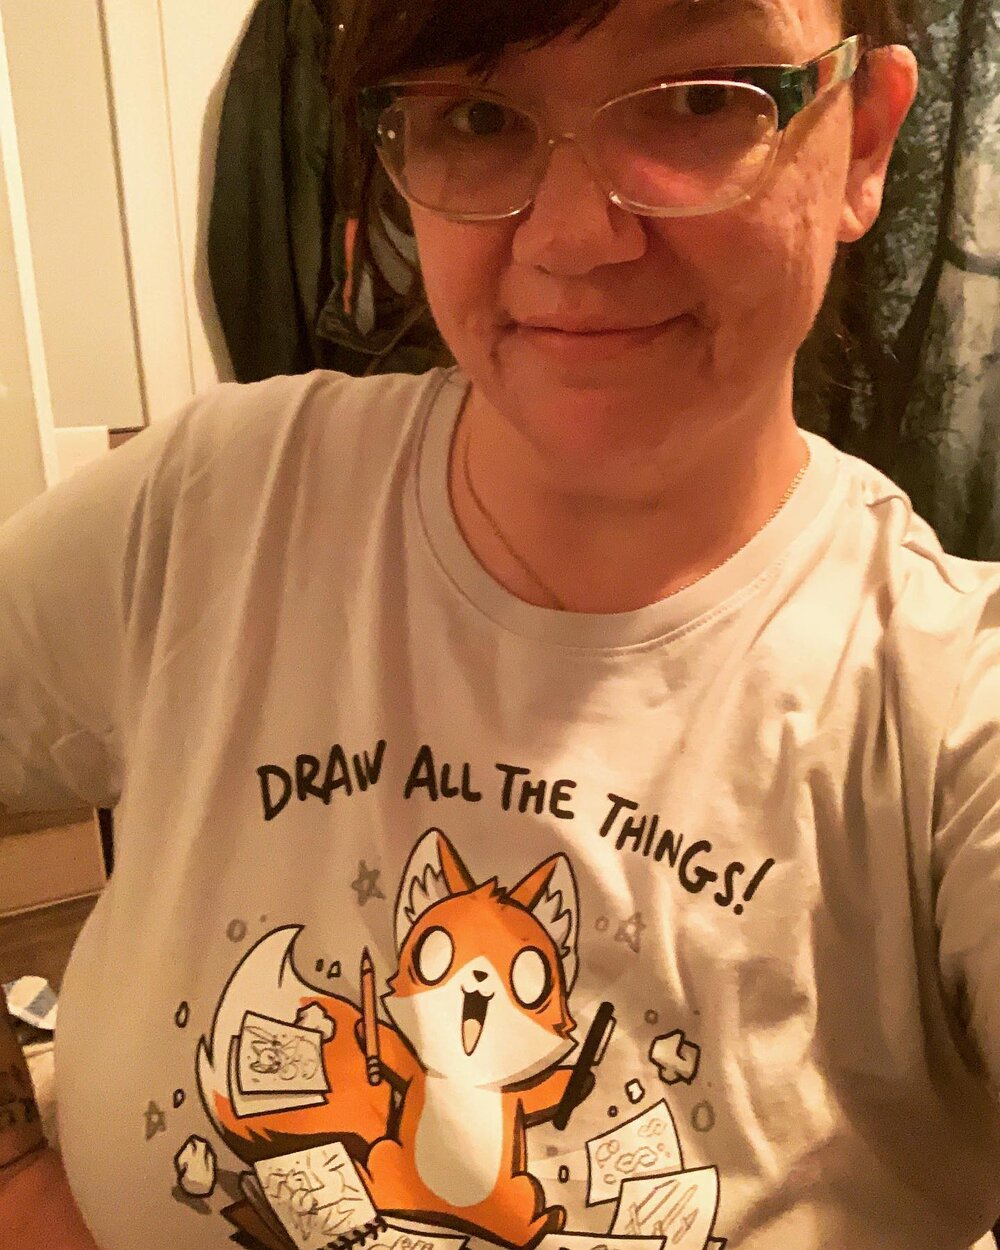 You got me, @teeturtle! How could I resist this?!
.
.
.
#artist #artistsoninstagram #tshirt #newshirt #cute #fox #draw #drawing #art #tshirtcollection #myface #bathroomselfie #teeturtle #drawallthethings